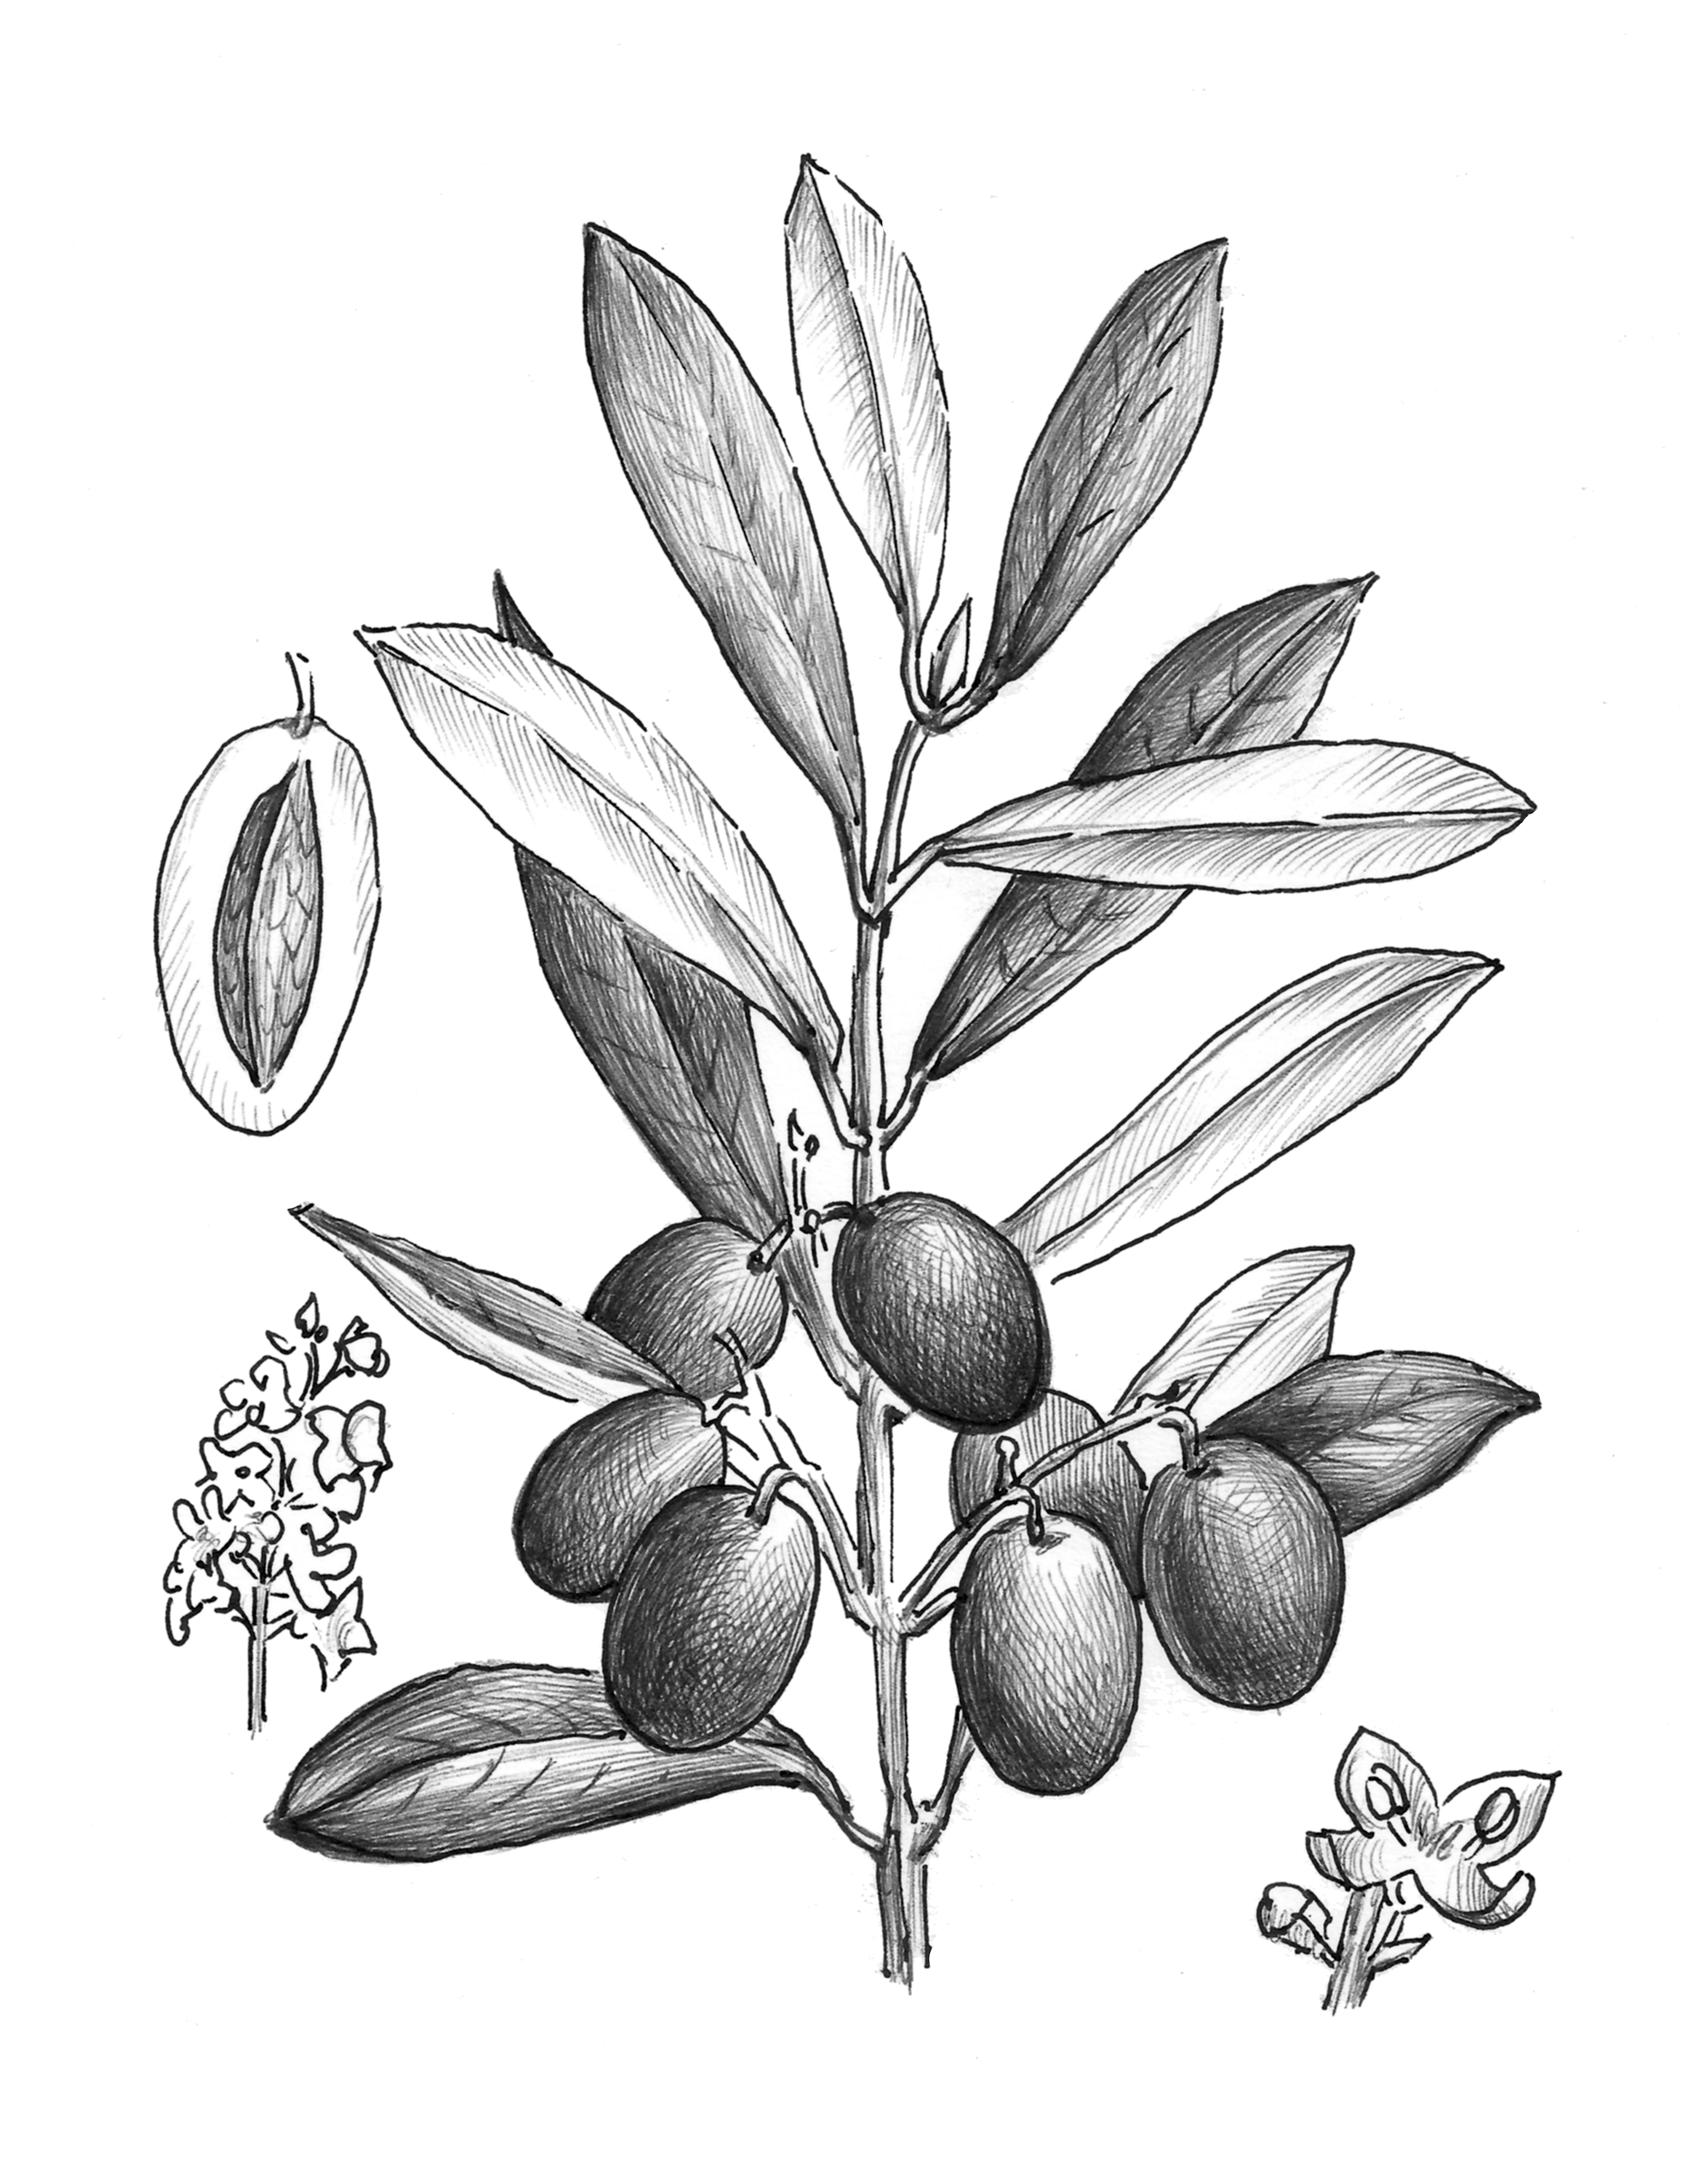 olivier-bota